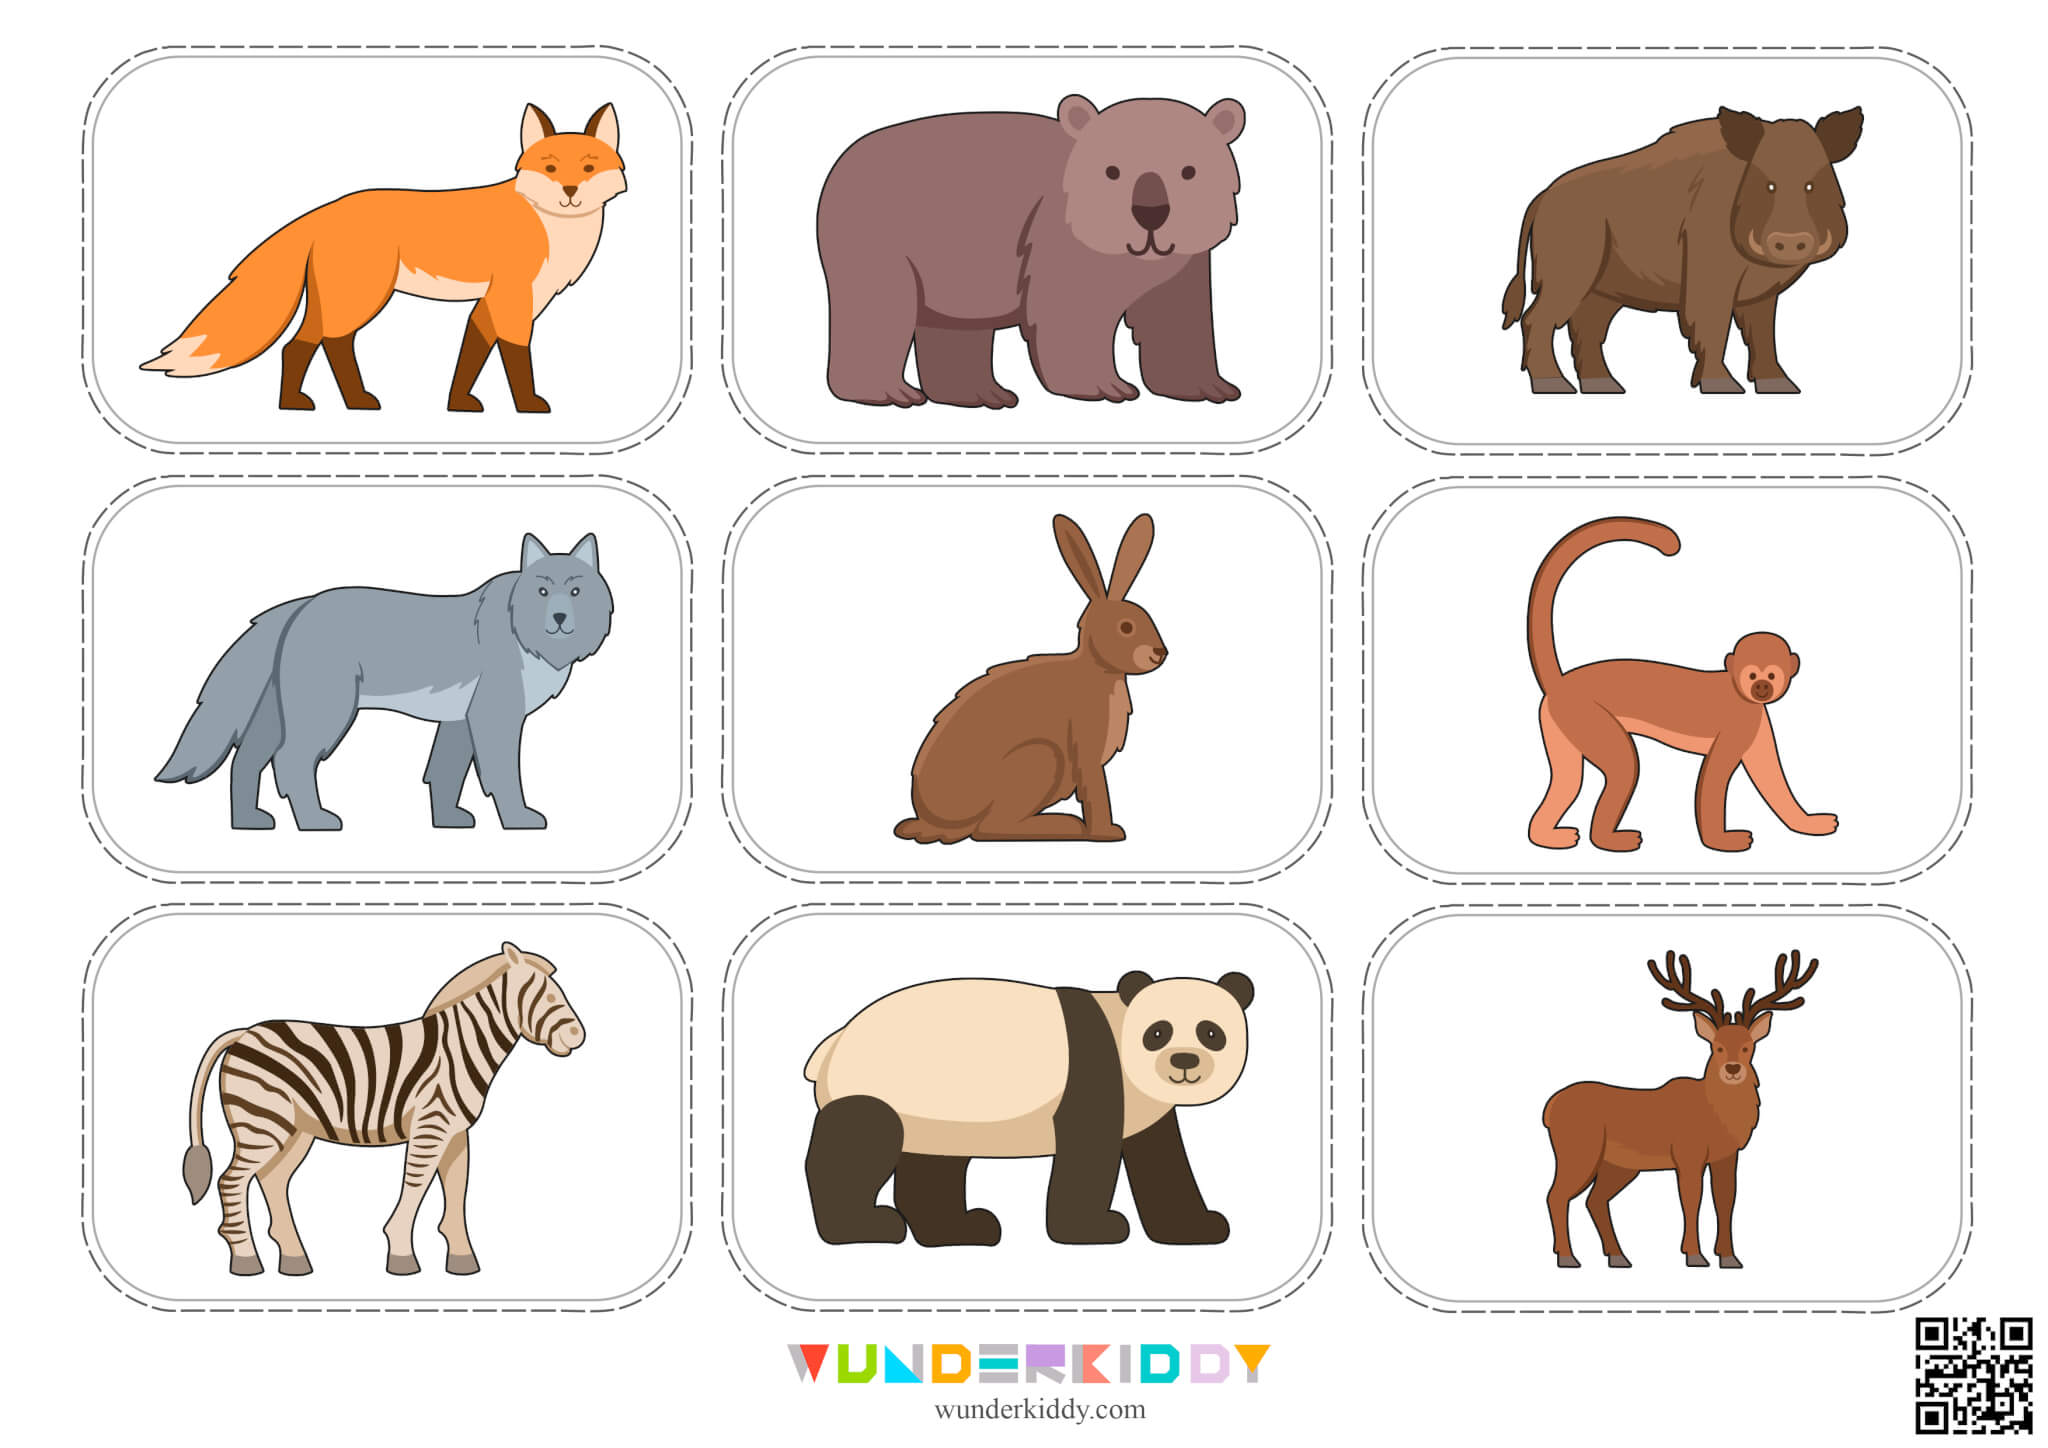 Animal Classification Sorting Game - Image 9